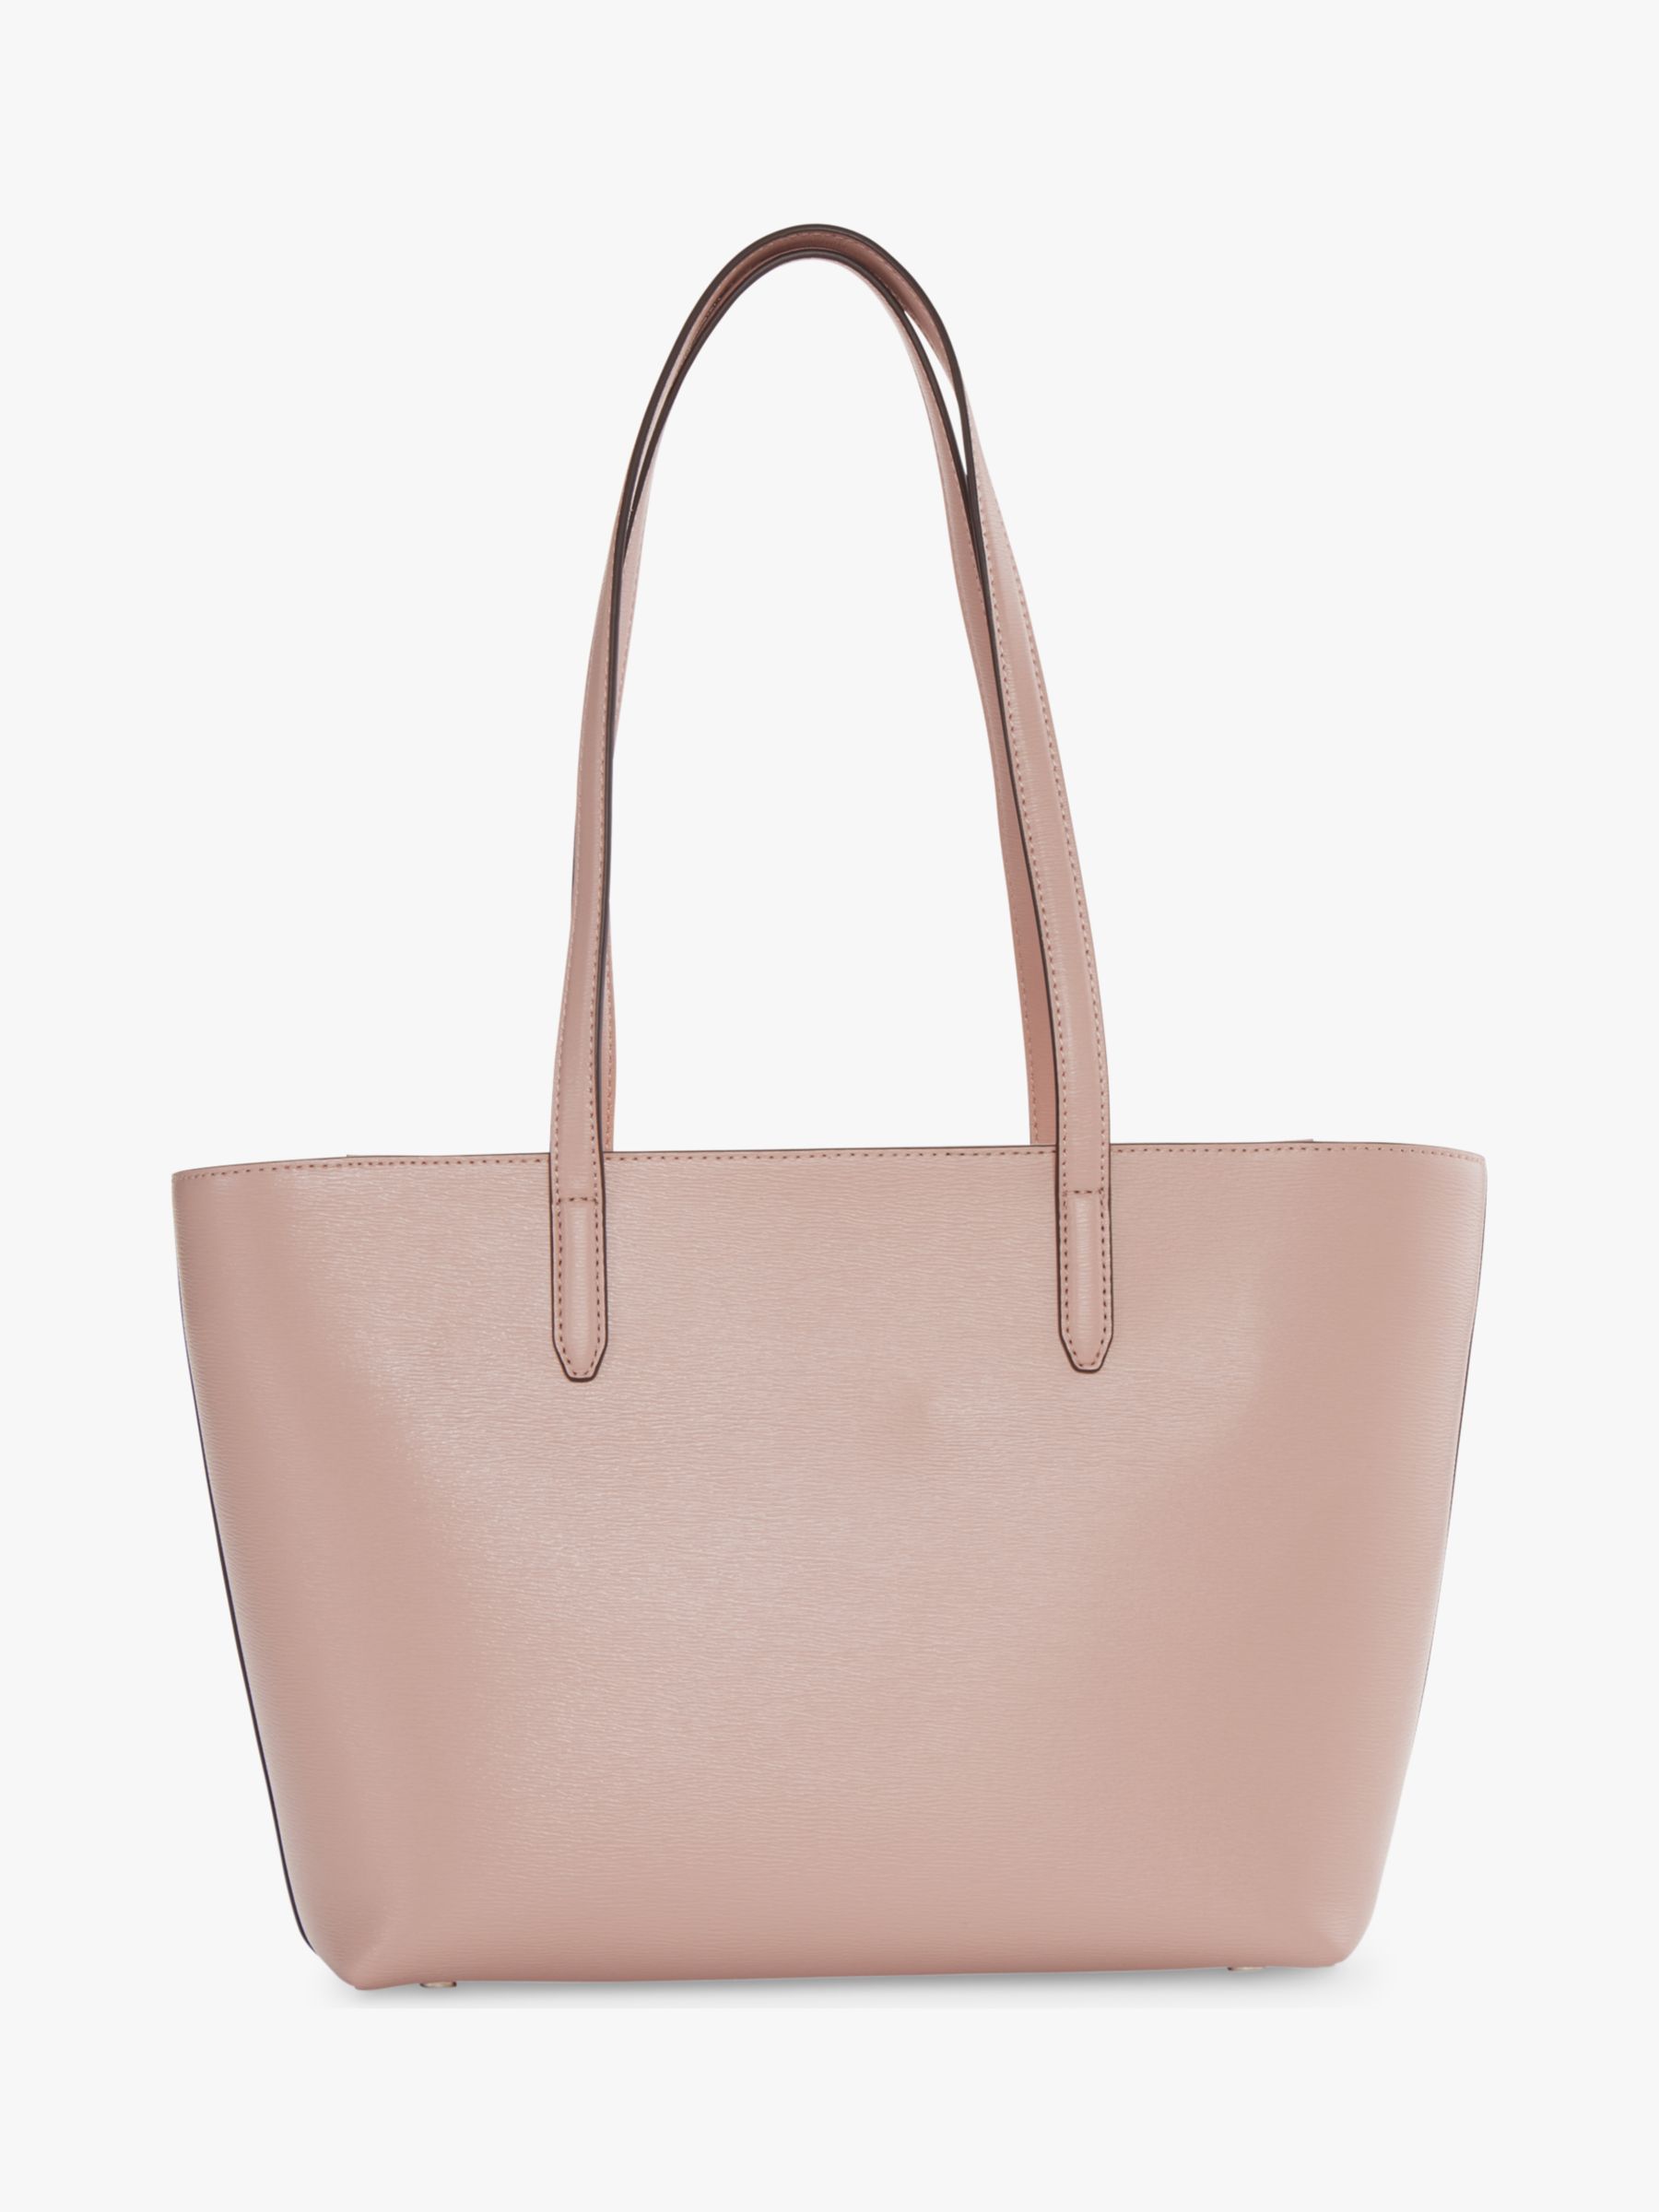 Buy DKNY Bryant Medium Leather Tote Bag Online at johnlewis.com